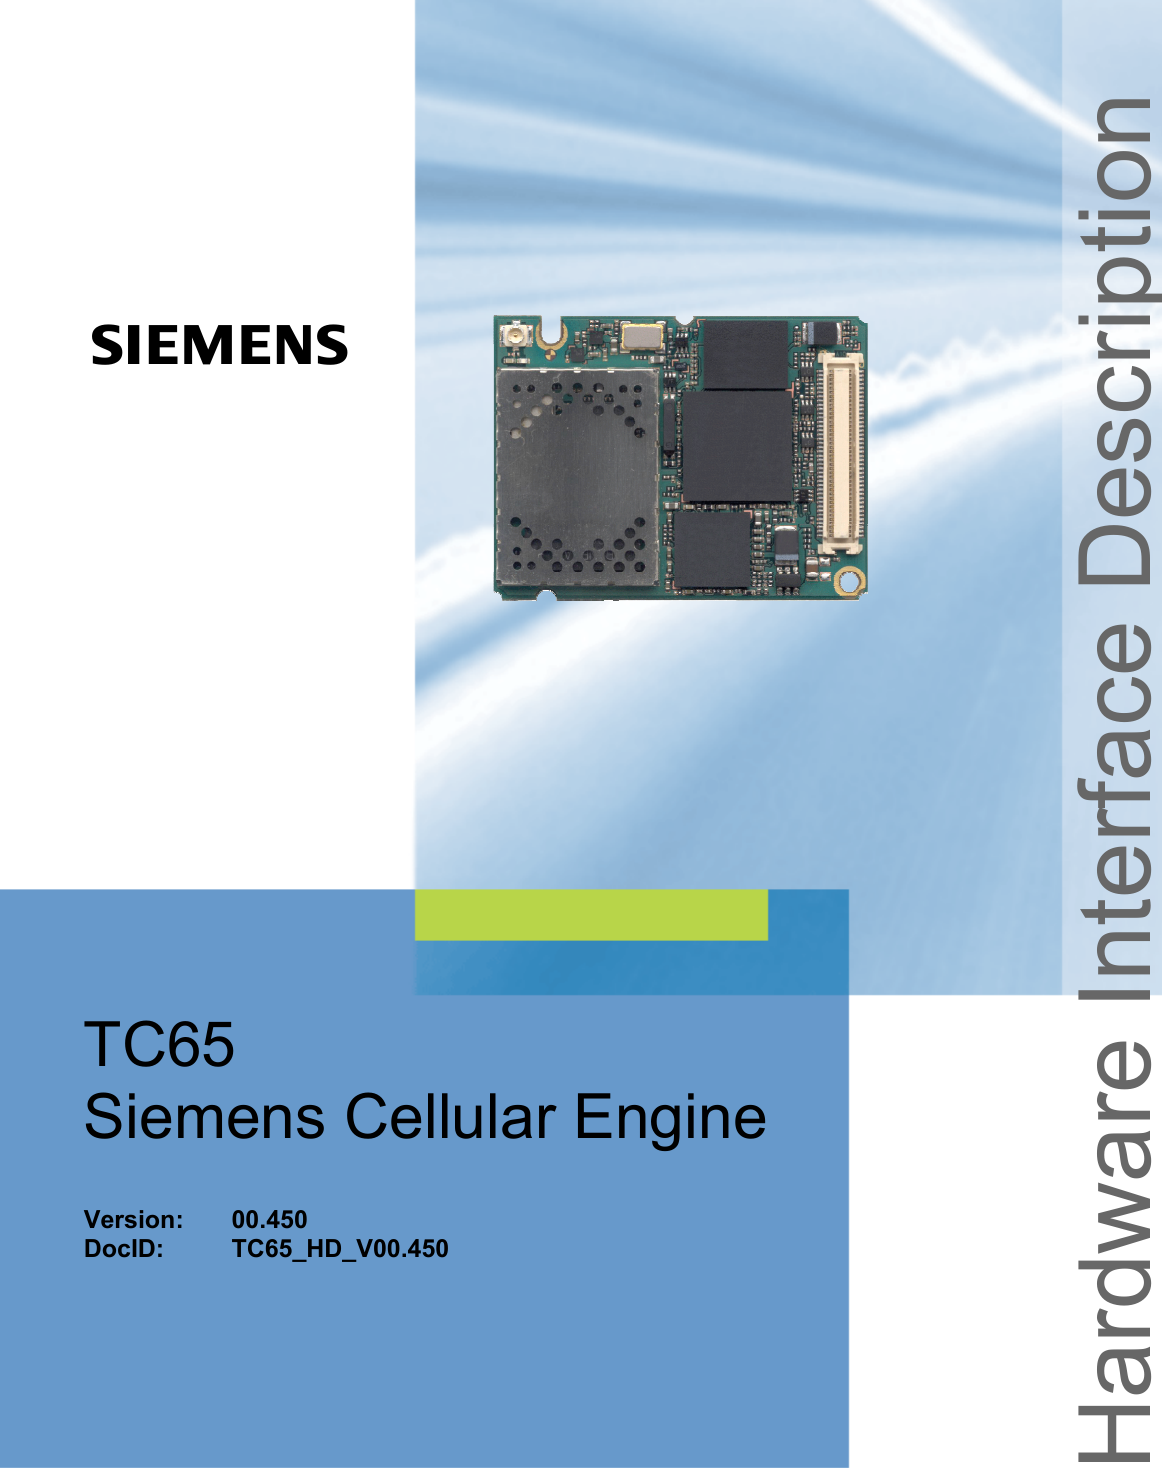   Hardware Interface Description TC65 Siemens Cellular Engine   Version: 00.450 DocID: TC65_HD_V00.450 s 